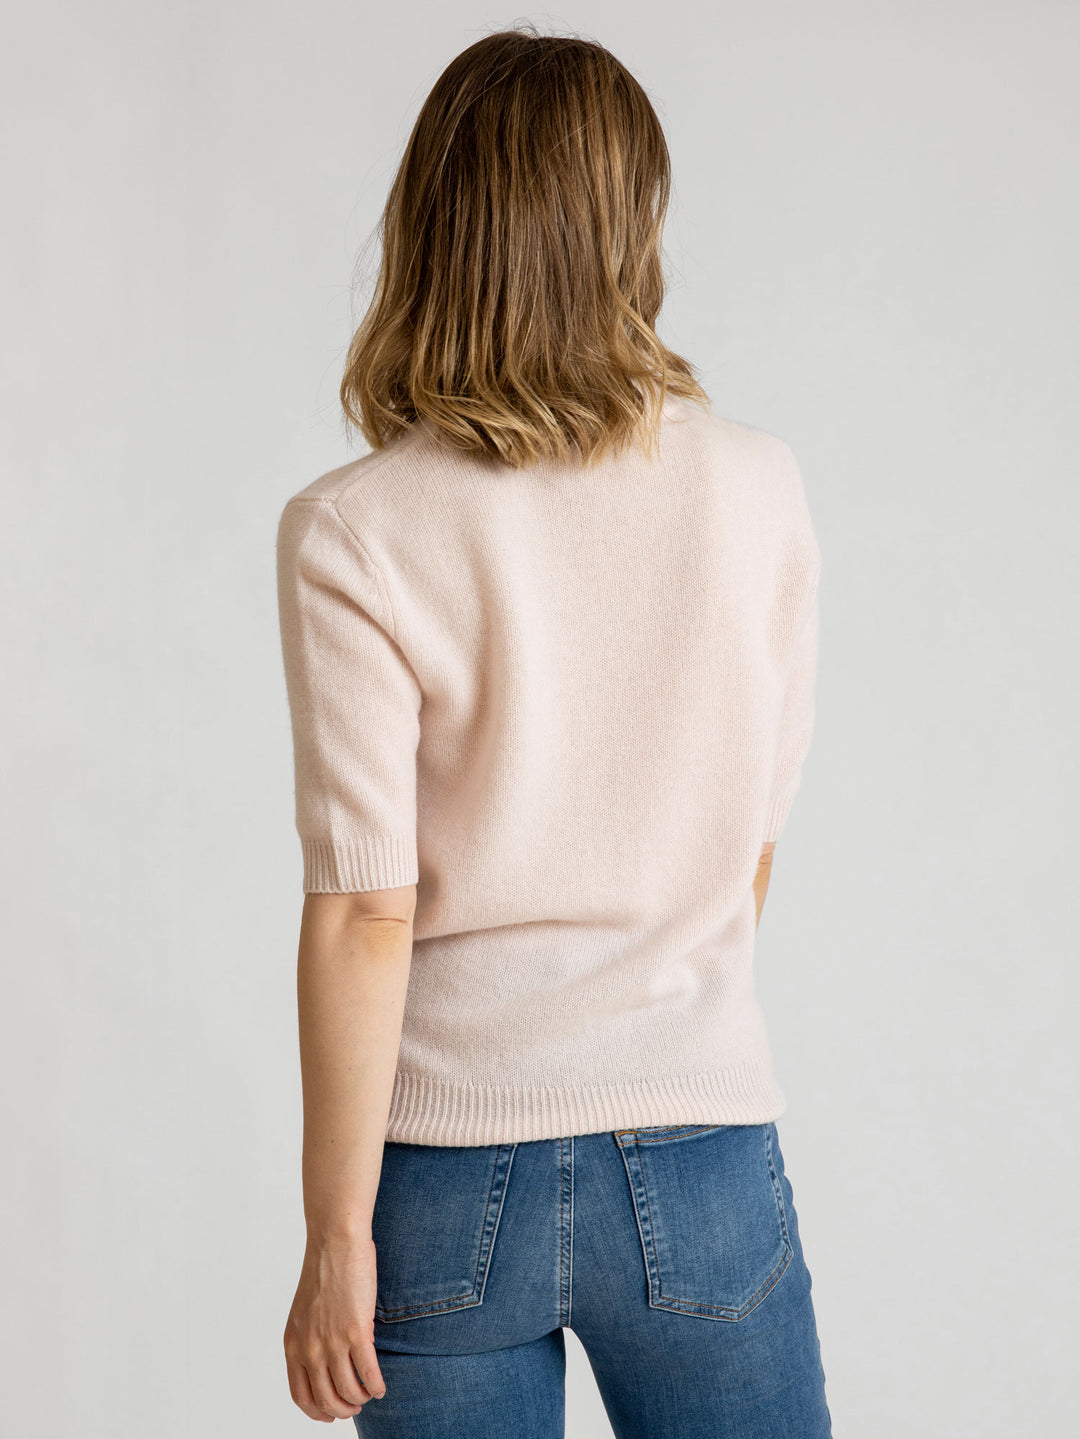 Cashmere sweater "Sofia" short sleeve, 100% cashmere, Norwegian design from Kashmina